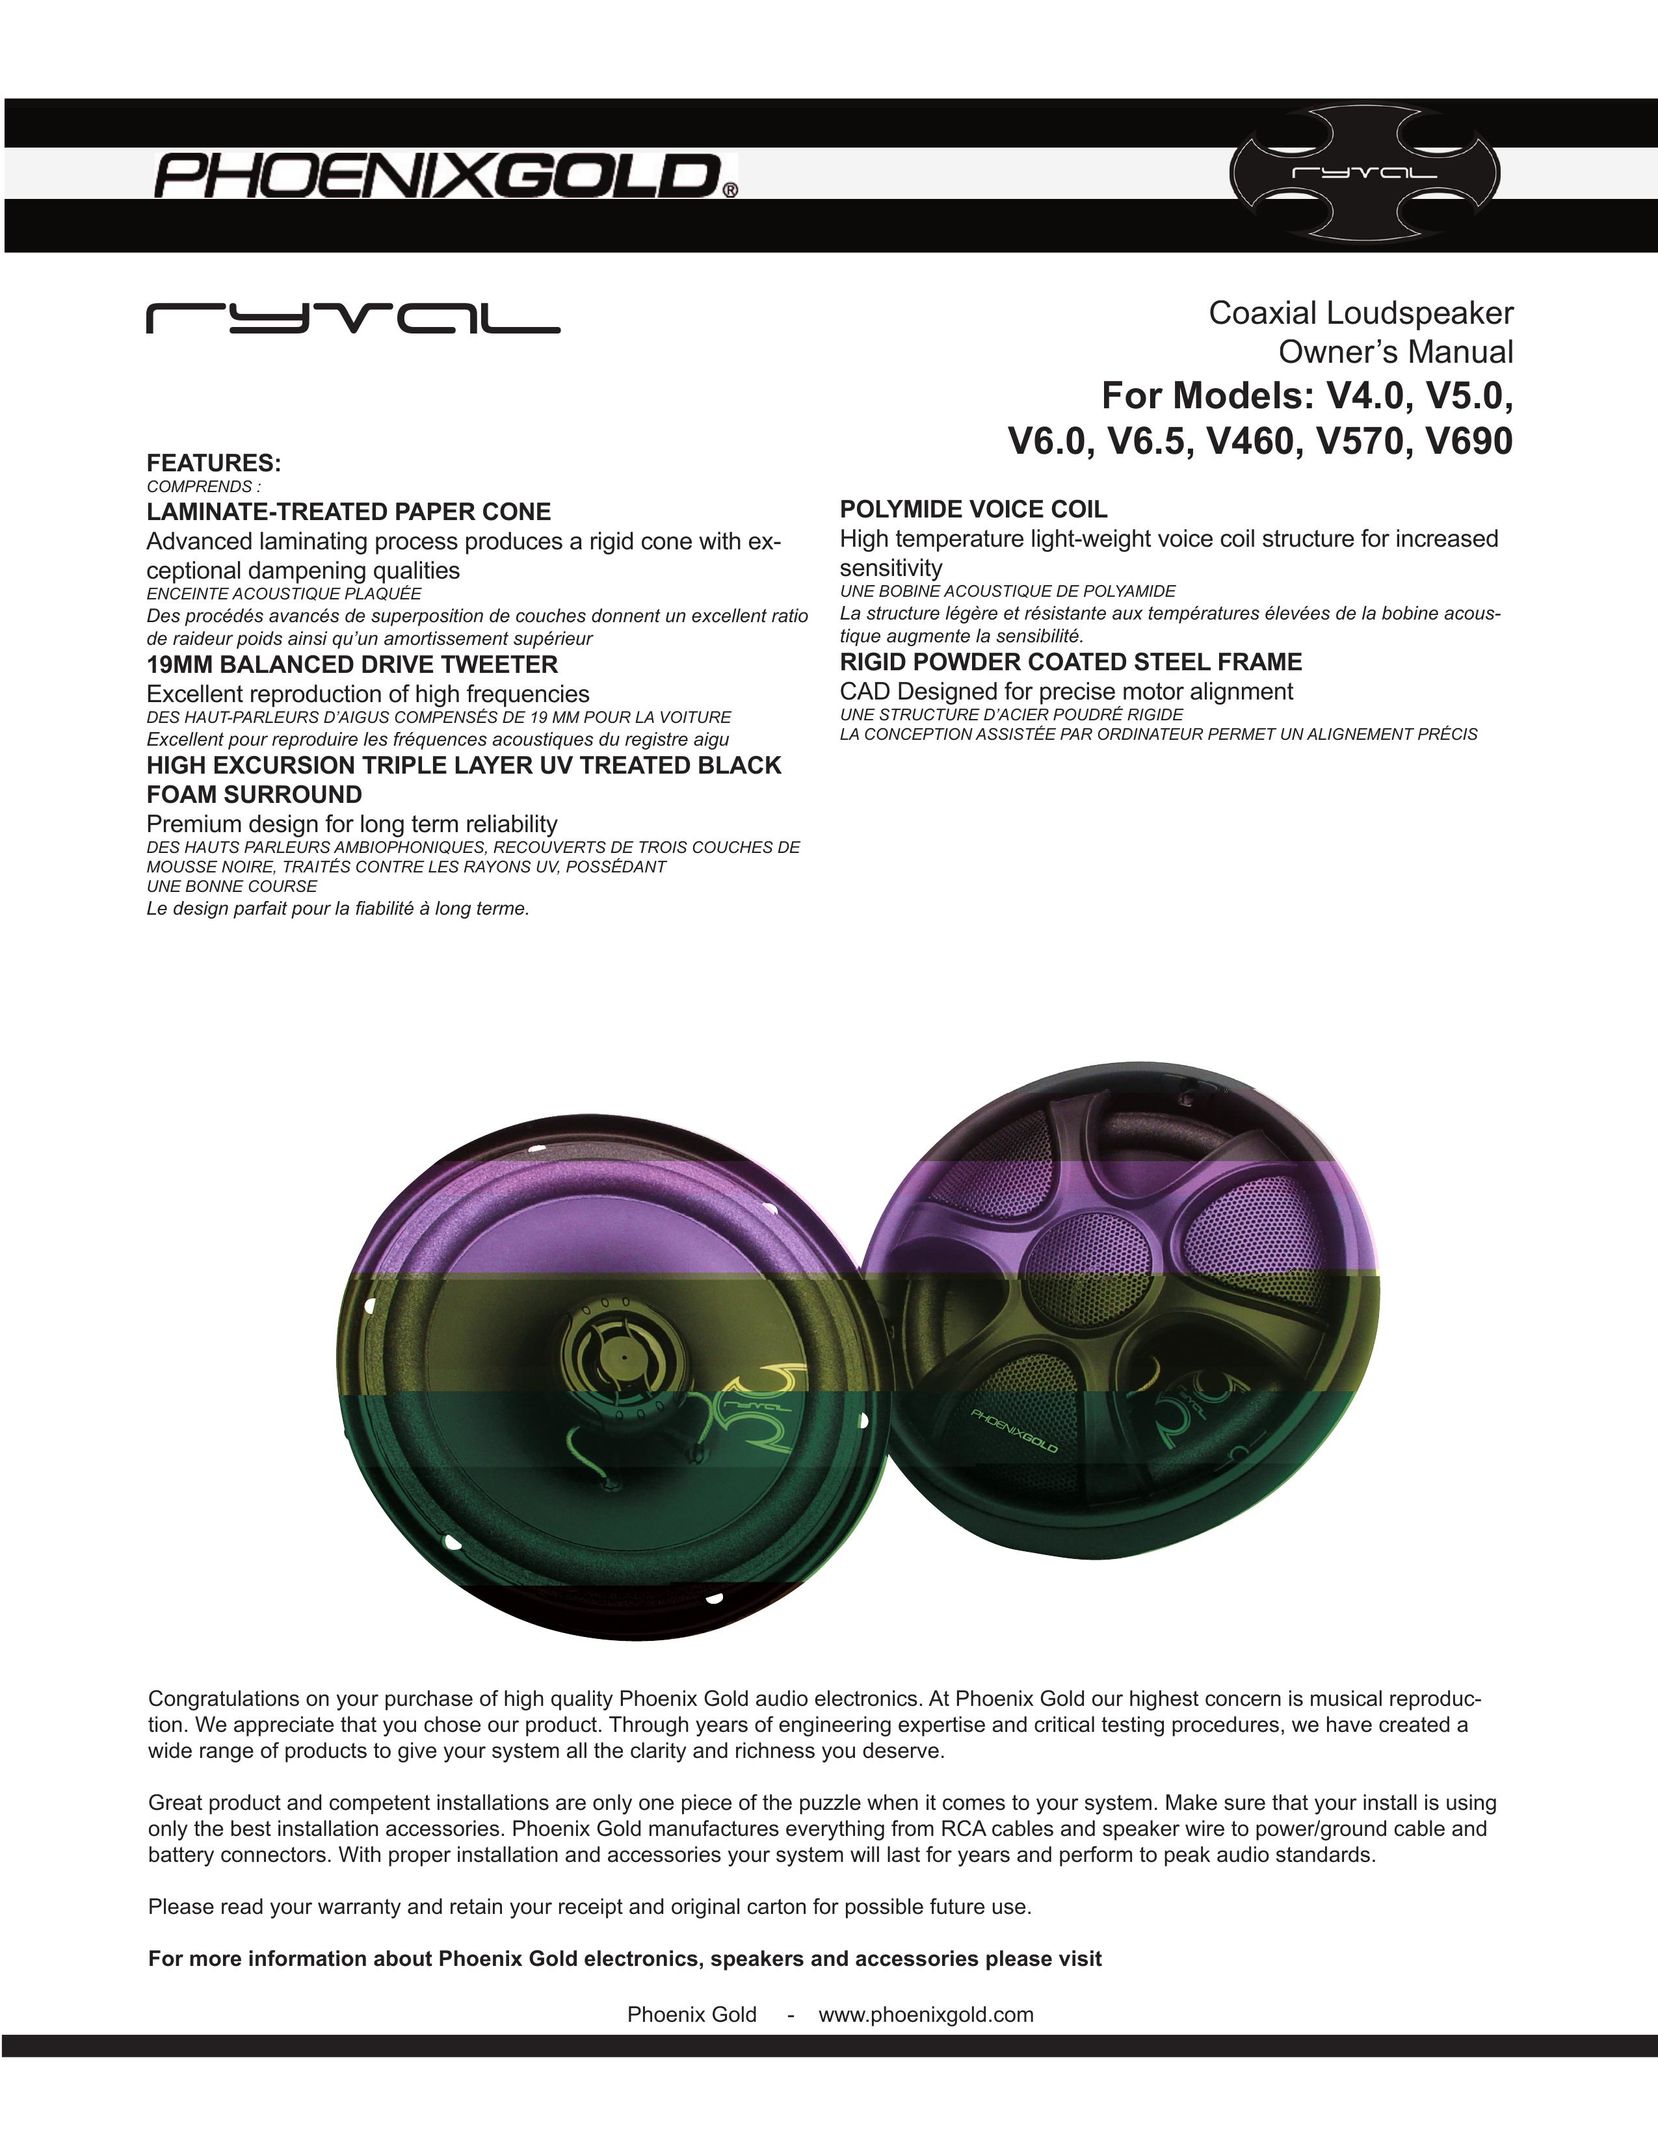 Phoenix Gold V5.0 Car Speaker User Manual